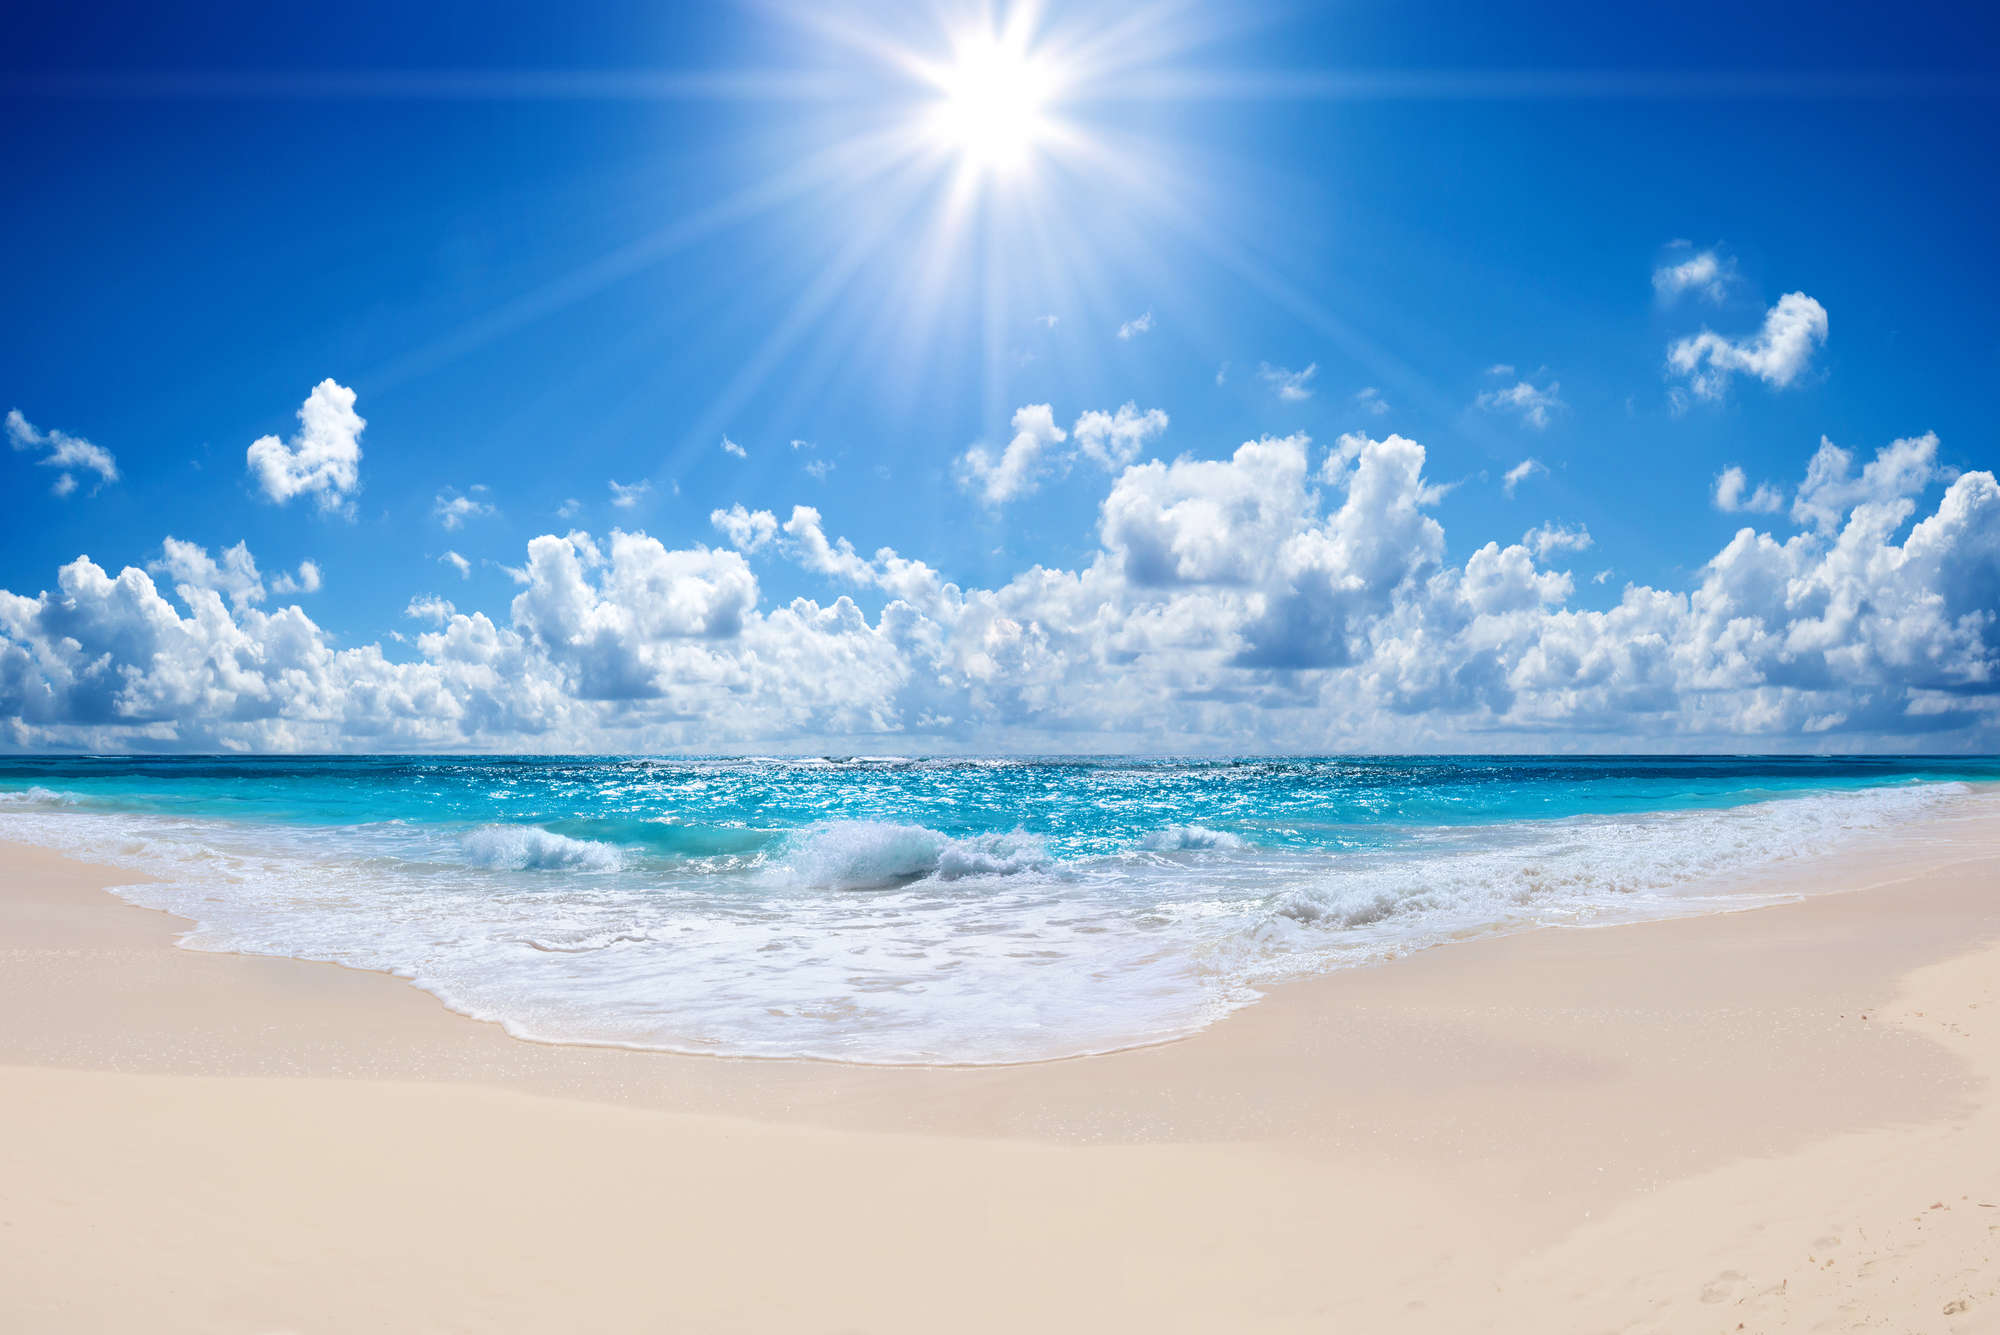             Strand Fototapete Wellengang mit strahlender Sonne auf Matt Glattvlies
        